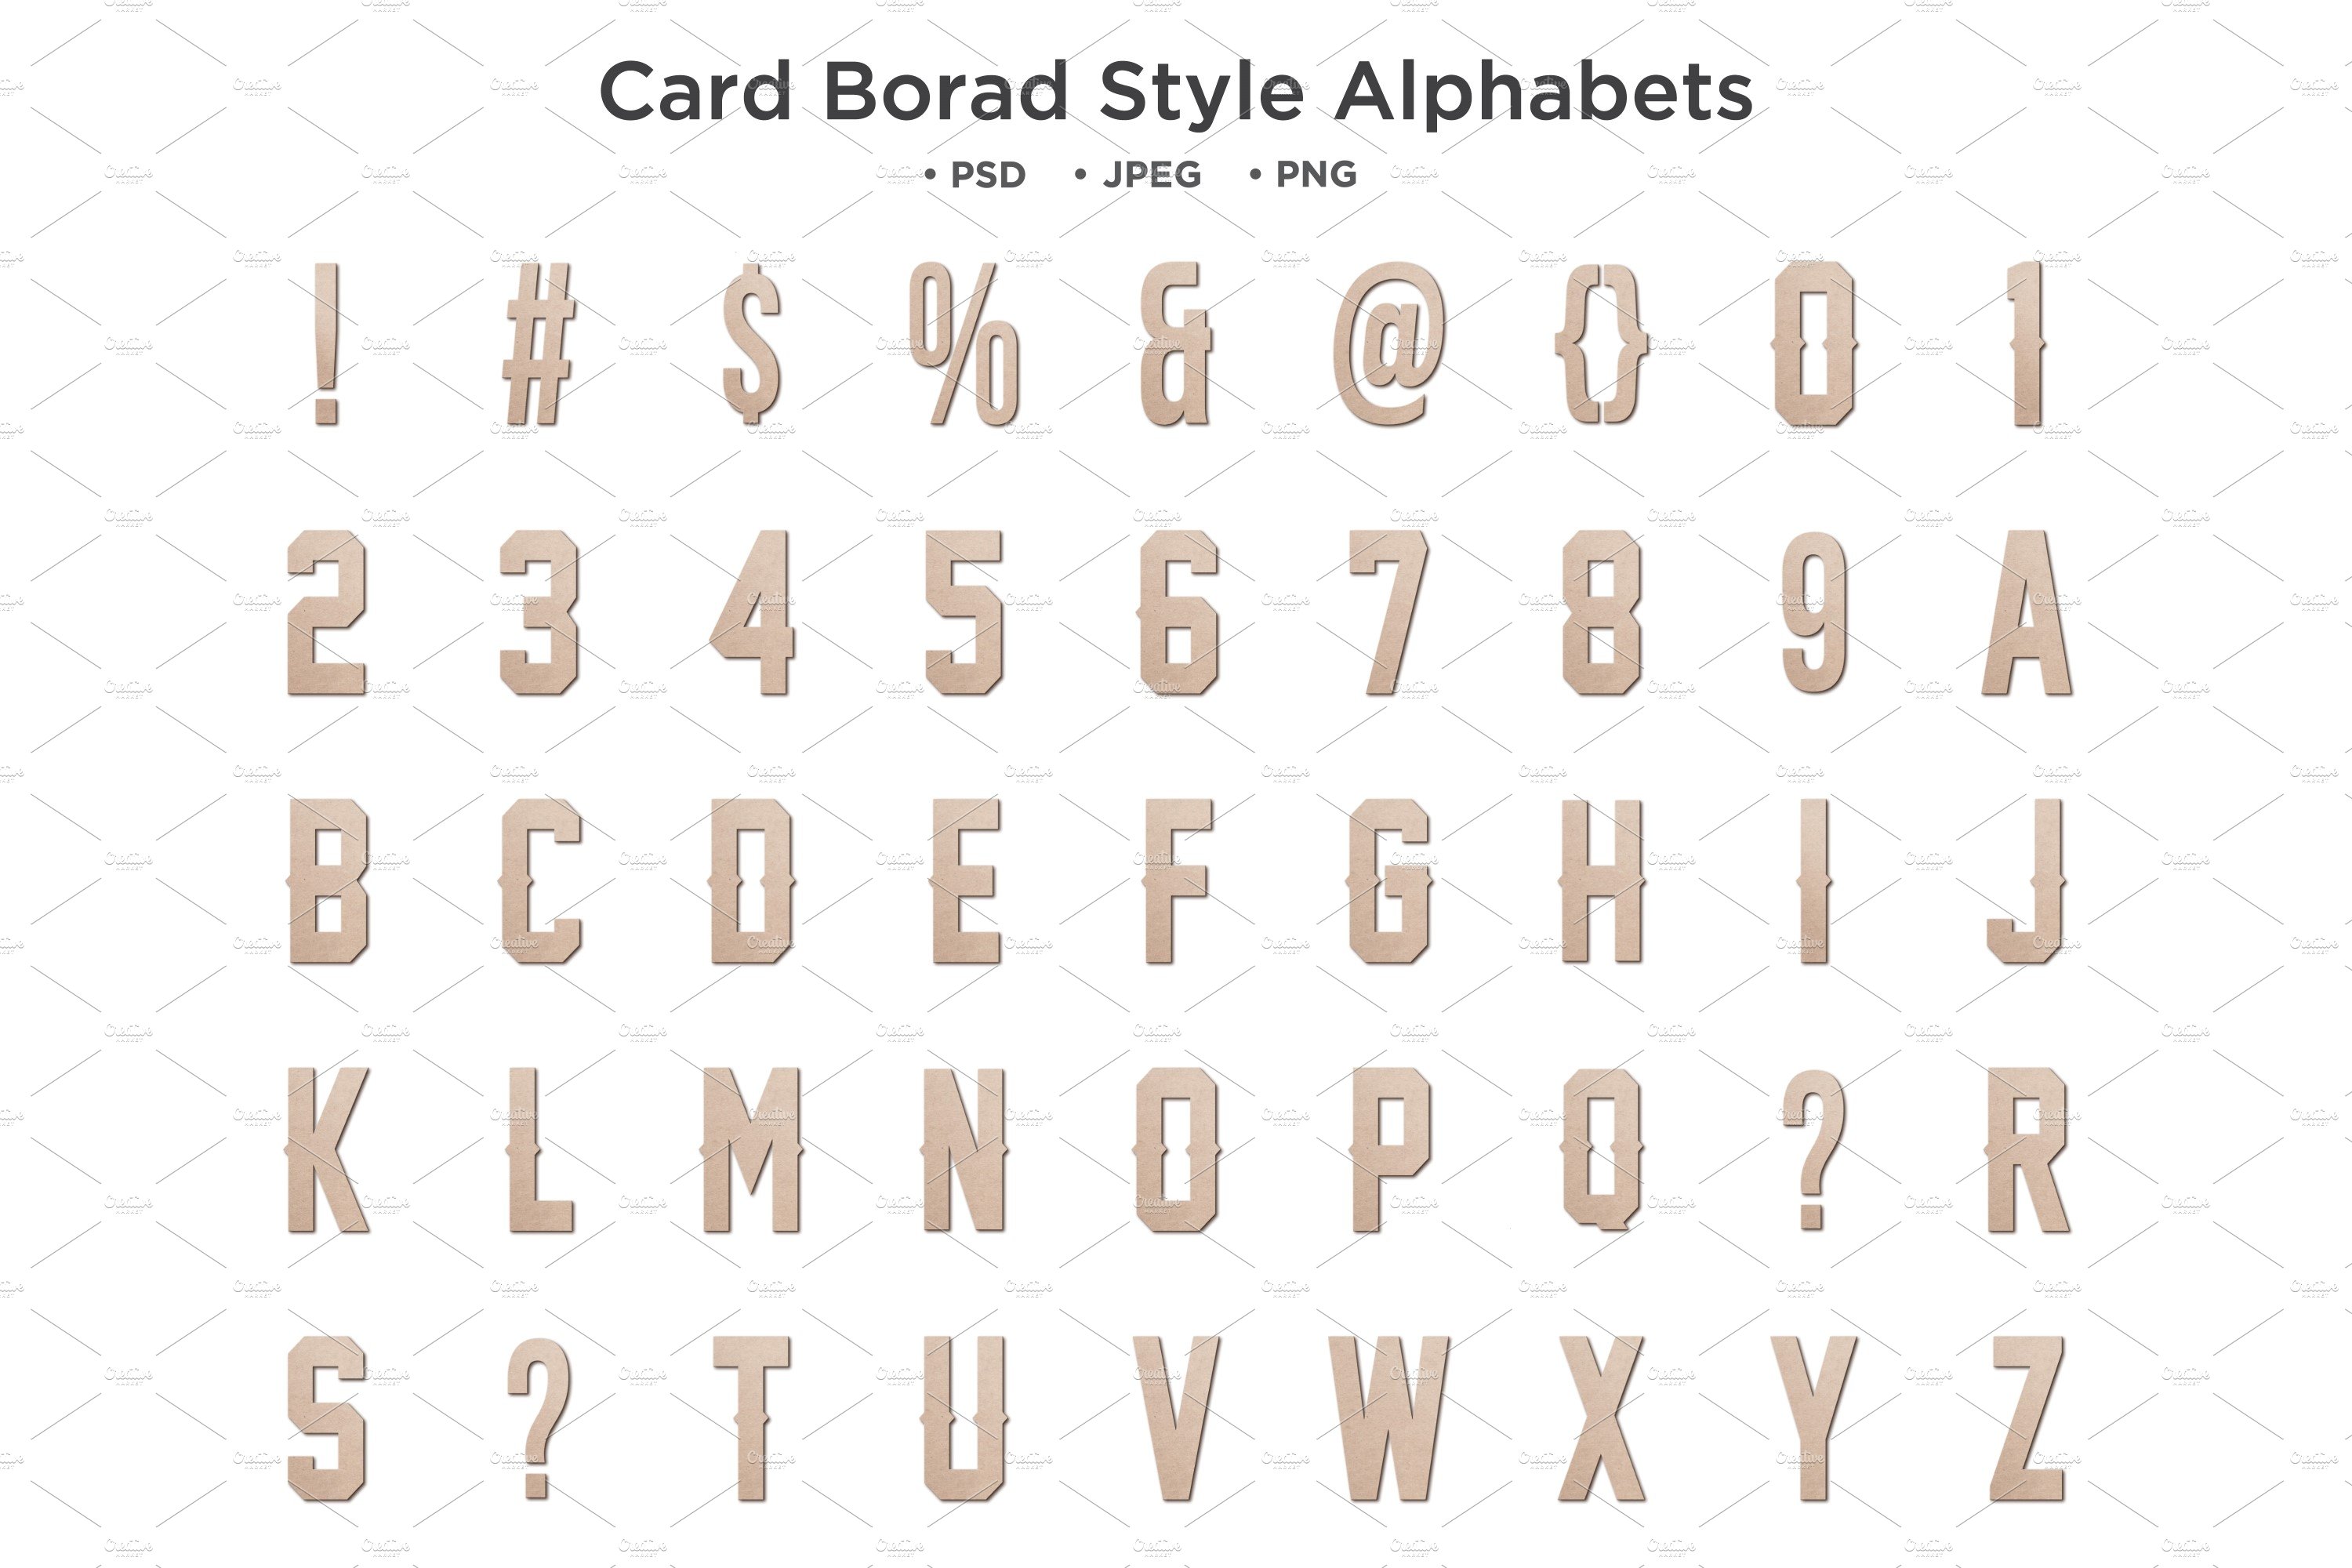 Cardboard Style Alphabet Typographycover image.